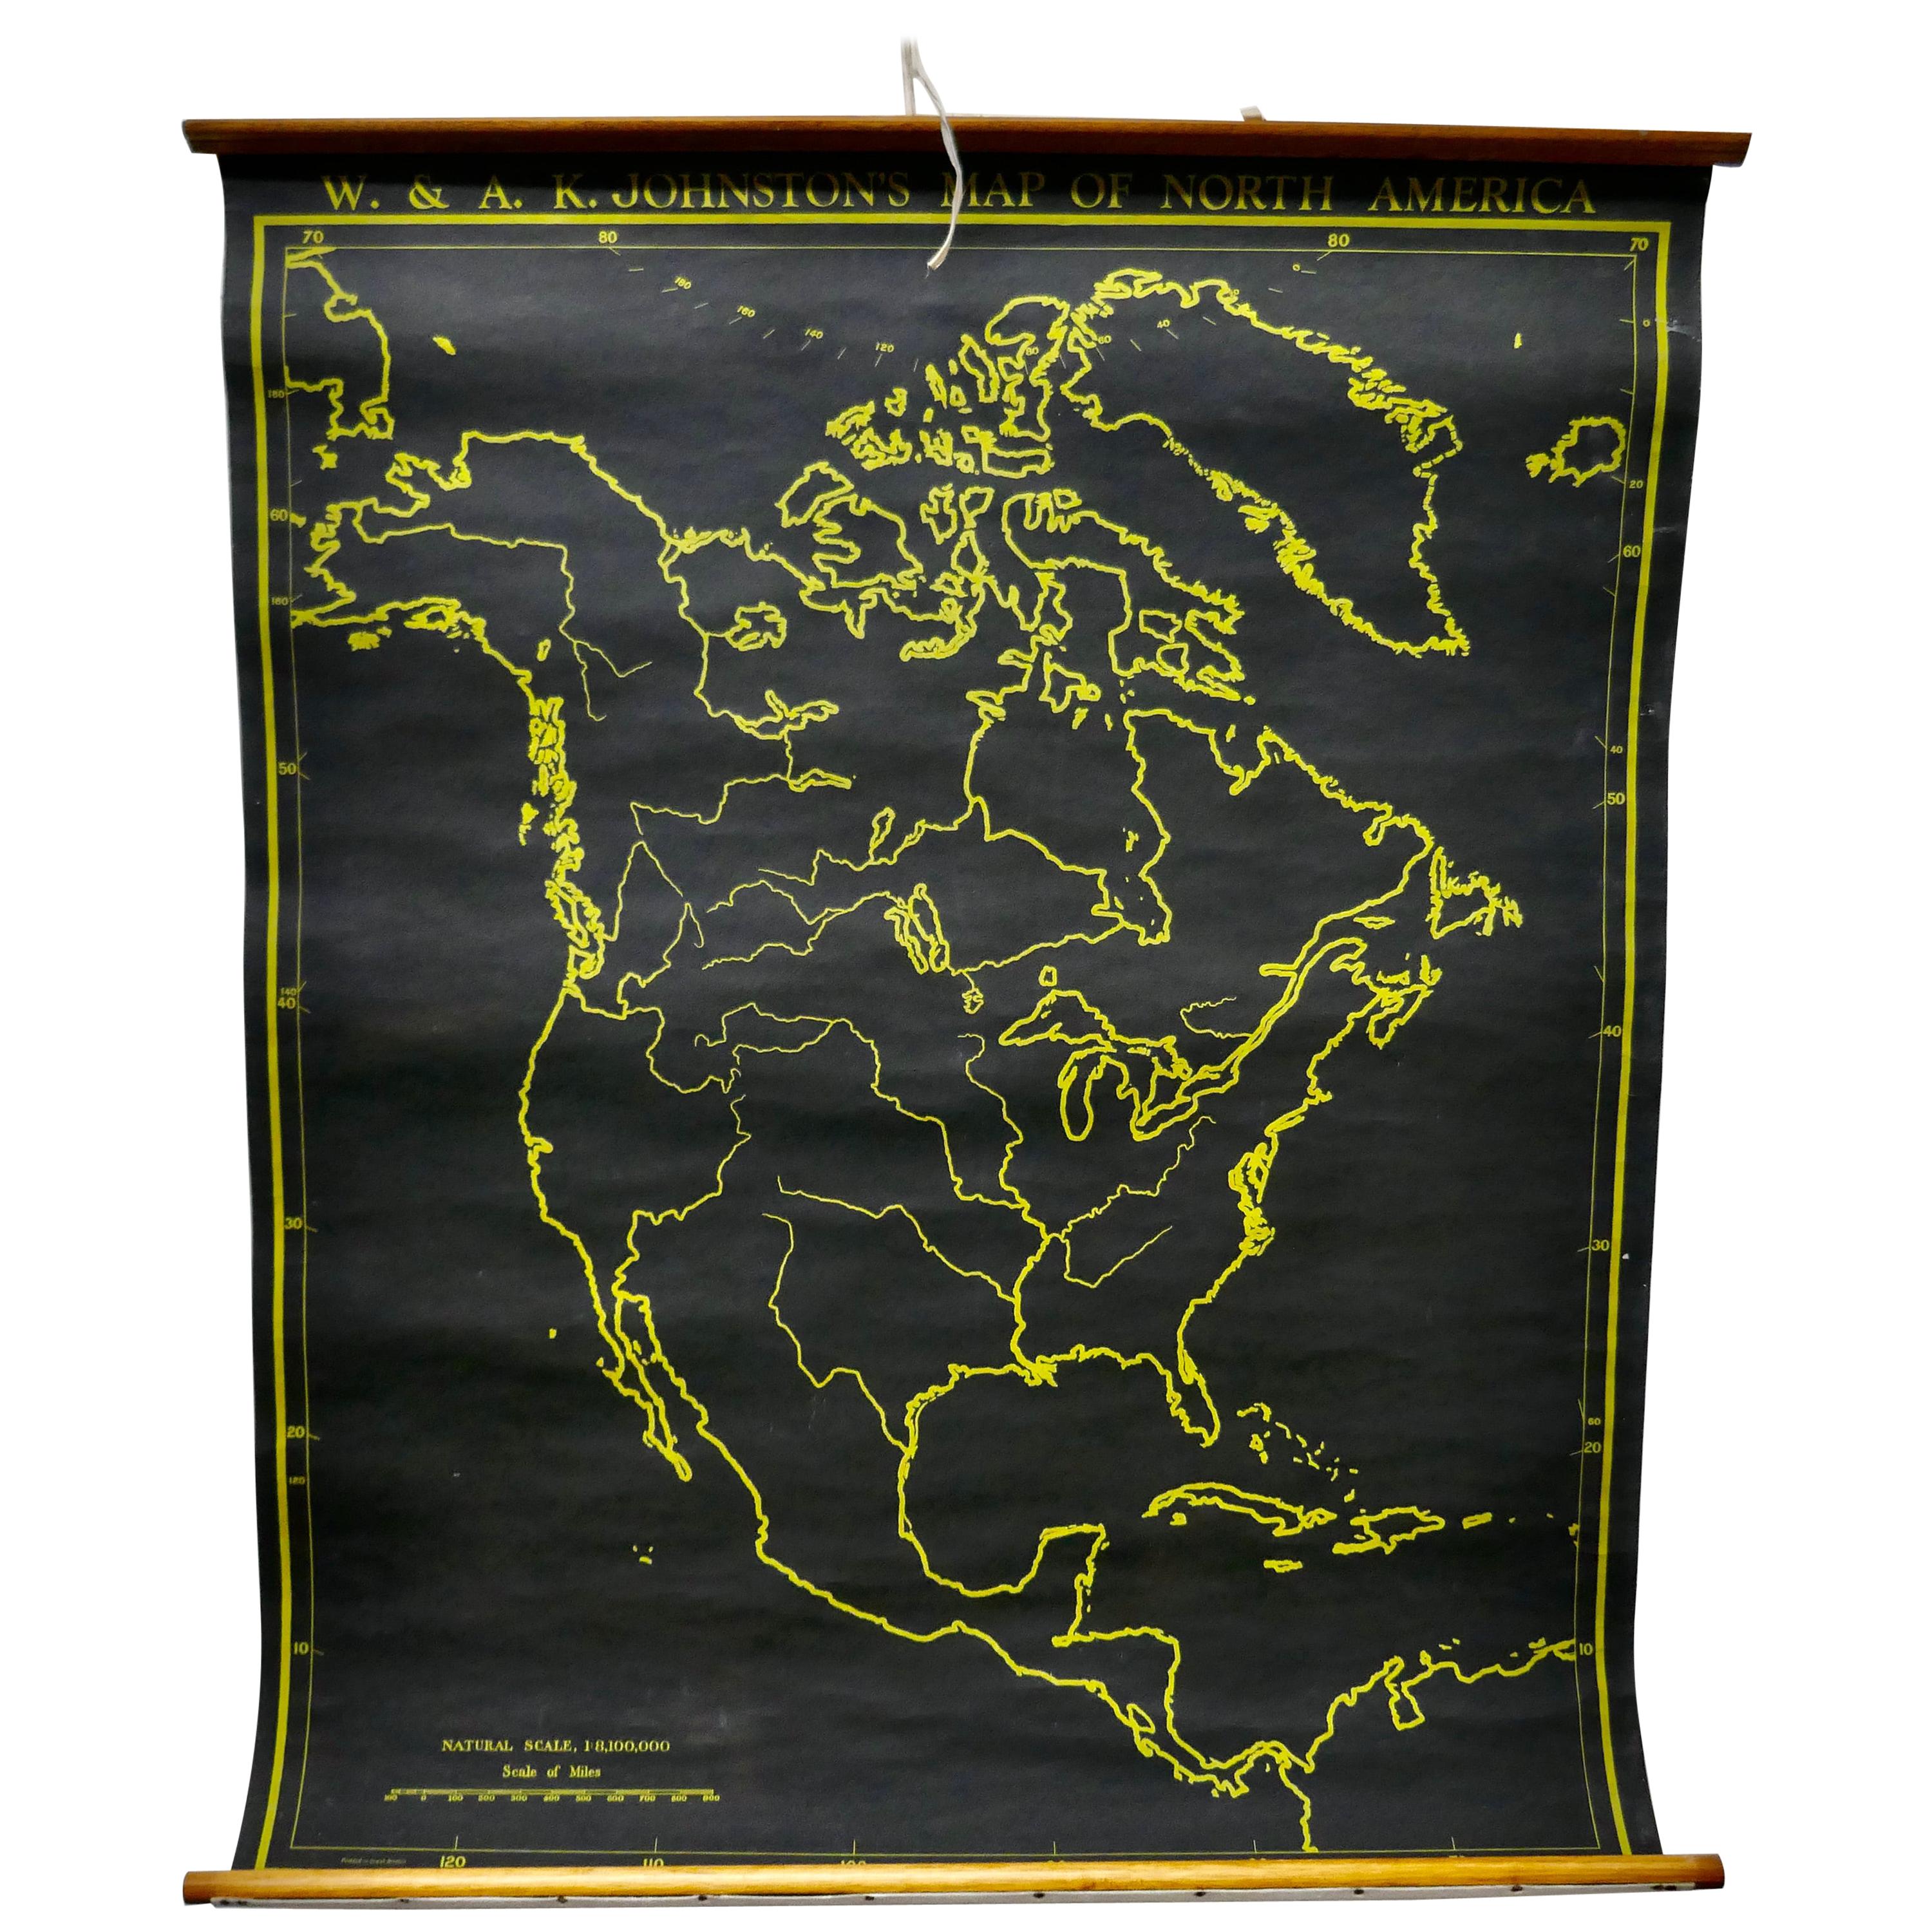 University Chart “Black Map of North America 